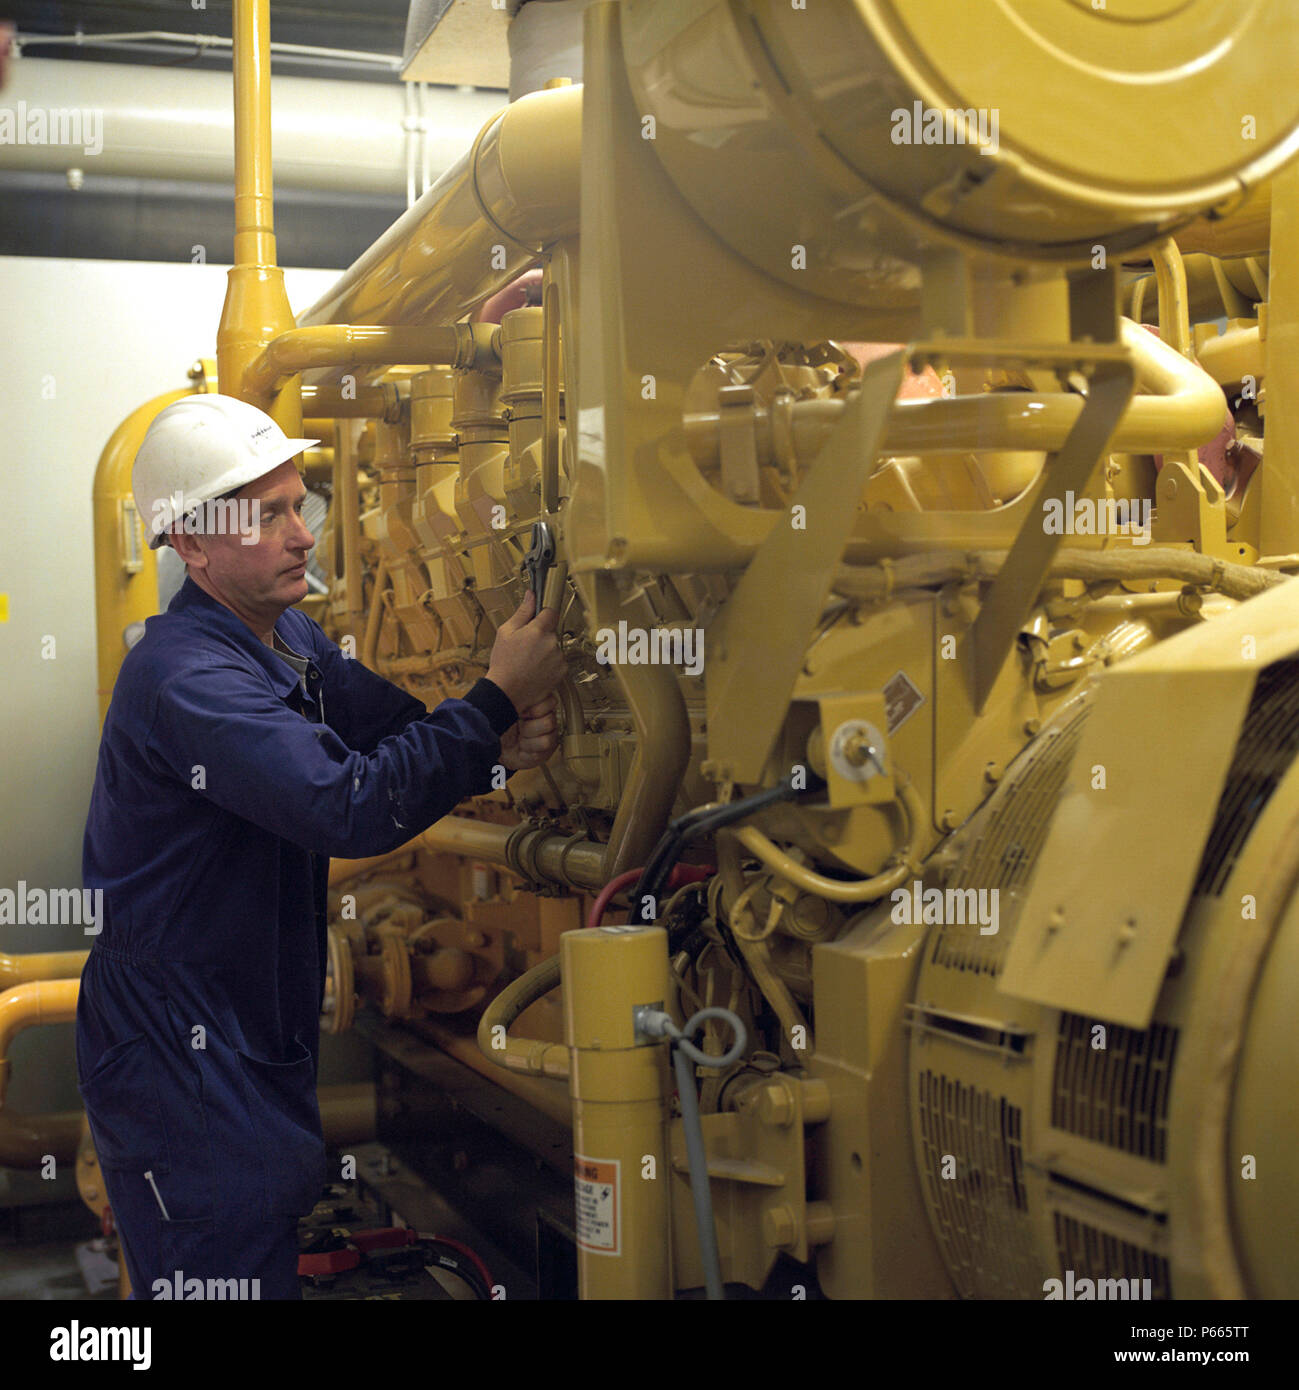 Maintenance work being undertaken upon a generator, United Kingdom. Stock Photo